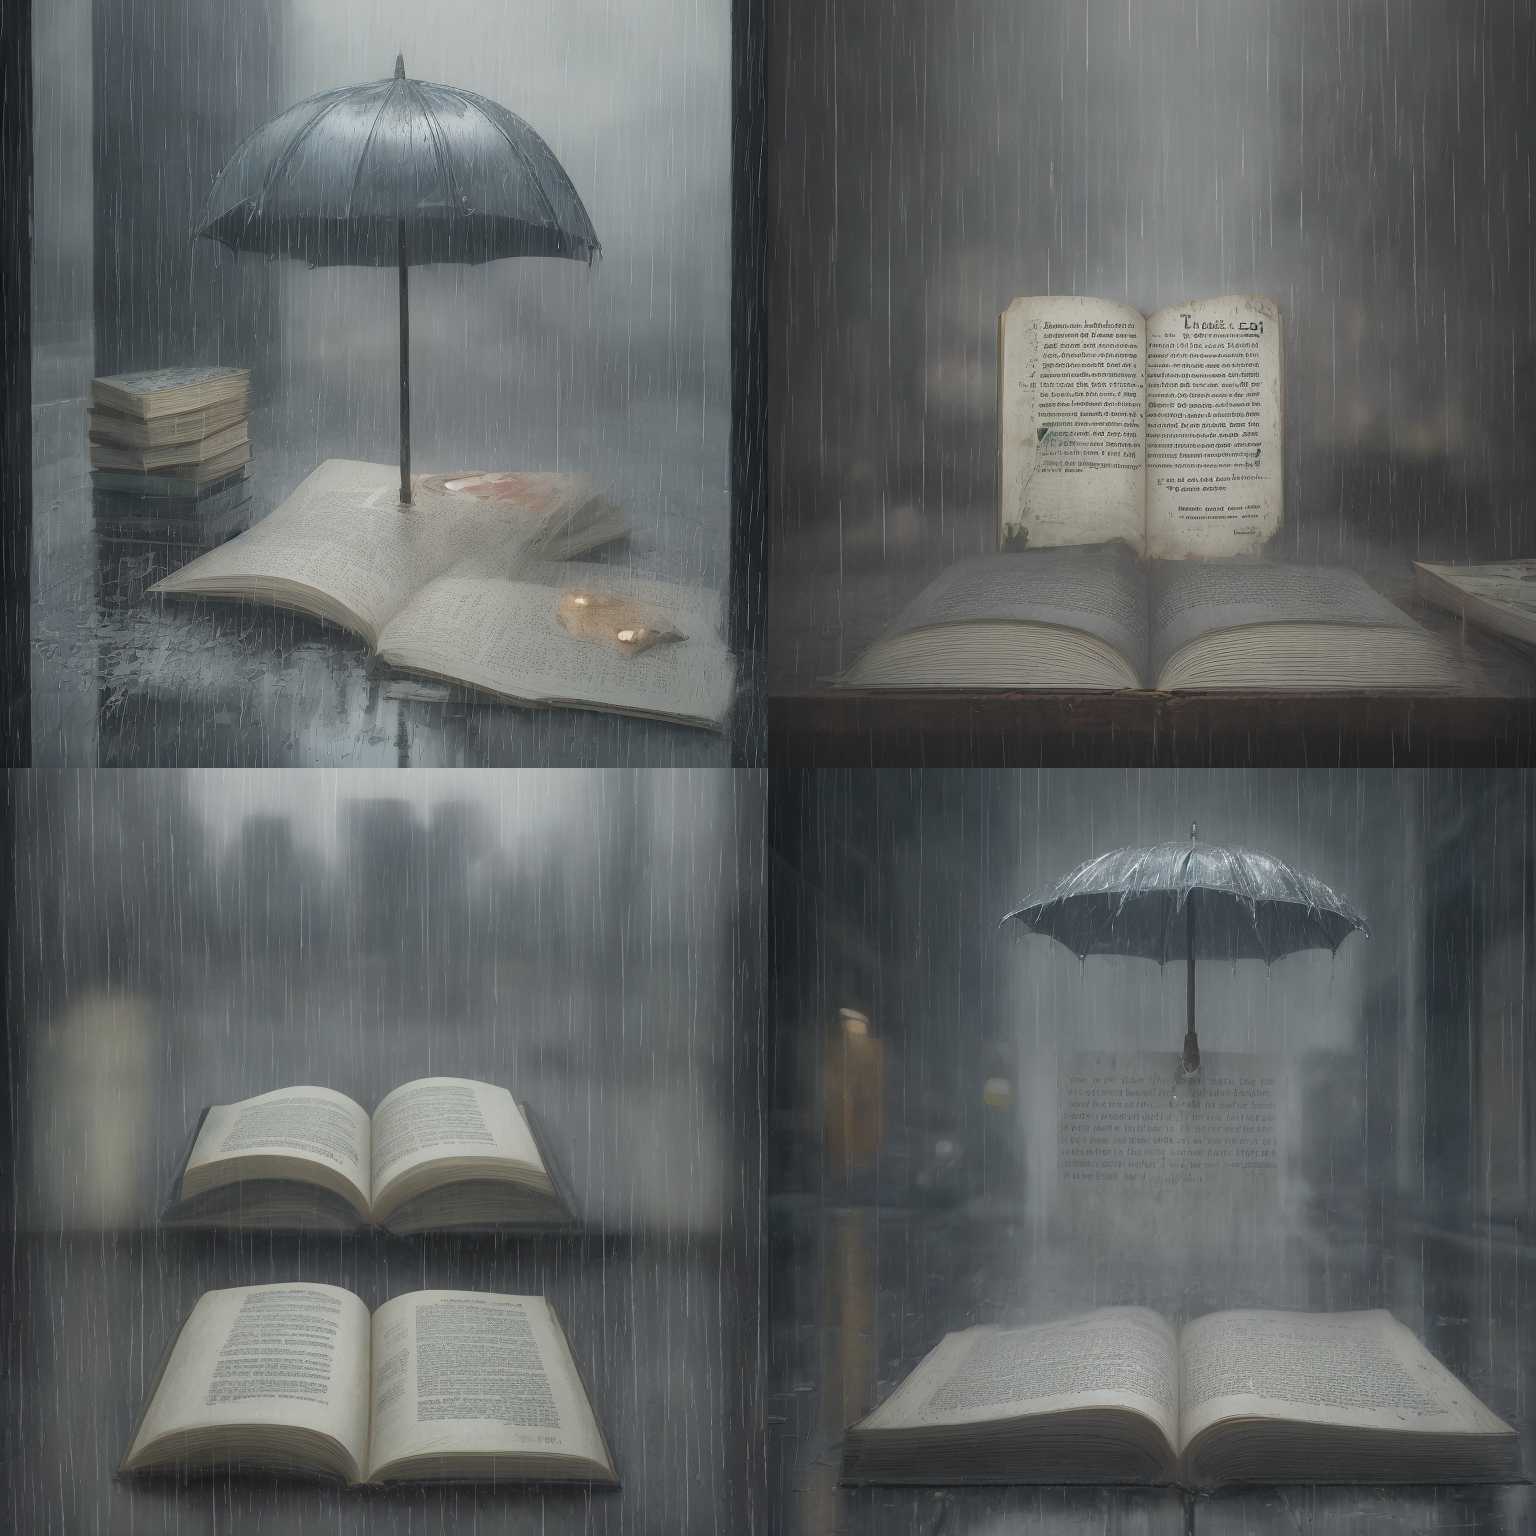 A book left open in the rain